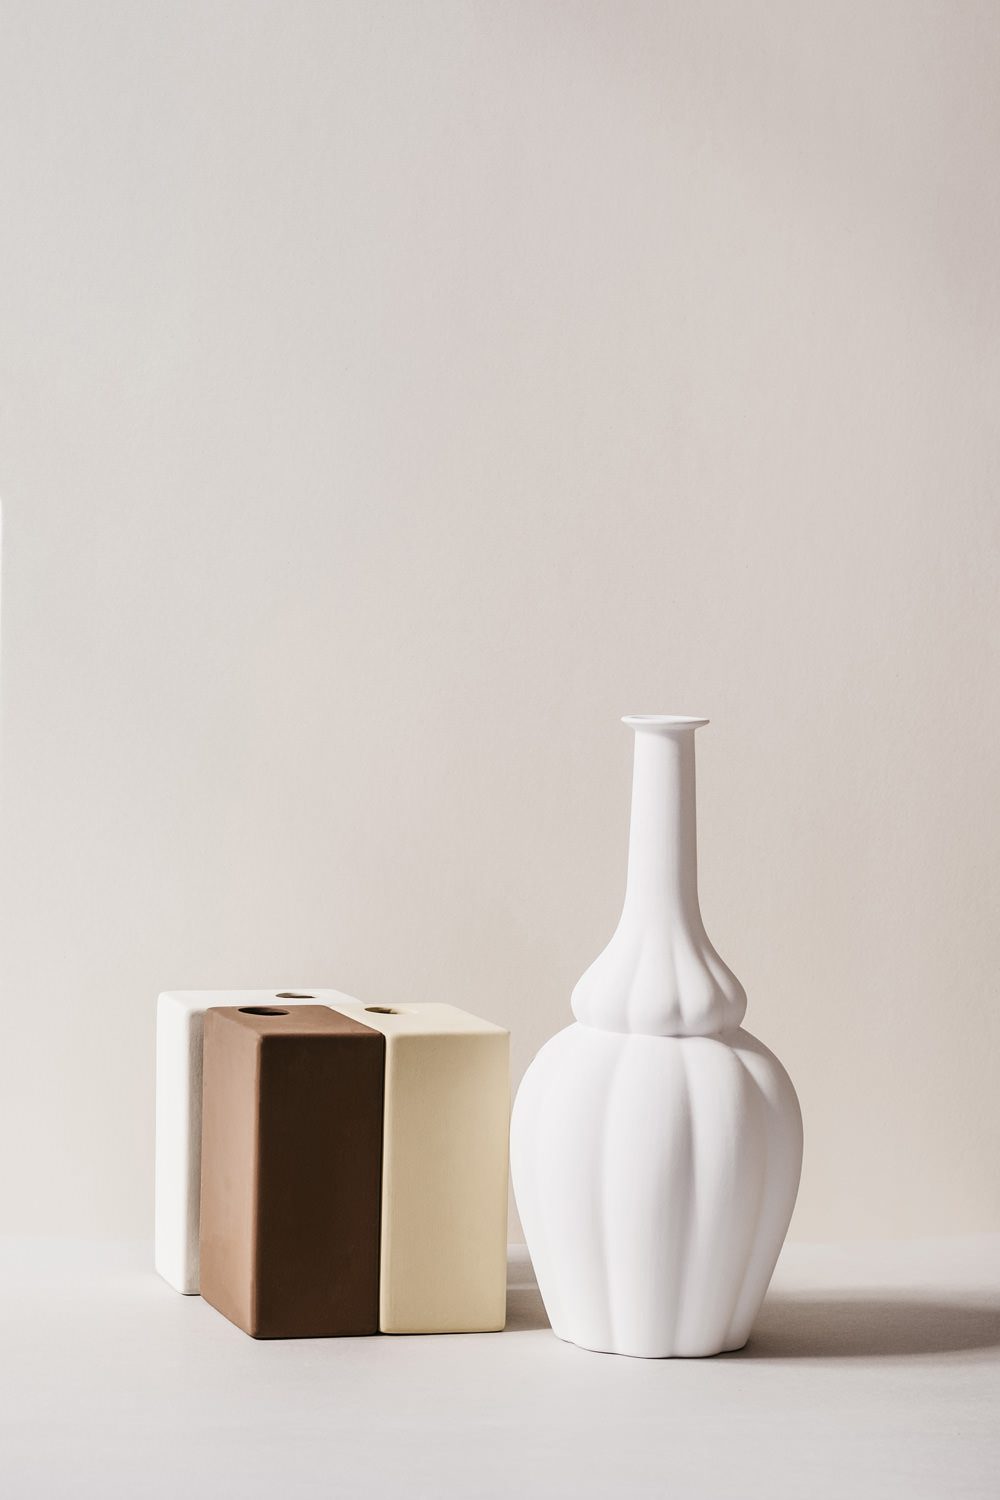 Le Morandine, Komposition aus Keramikvasen, Design von Sonia Pedrazzini, Foto: Le Morandine